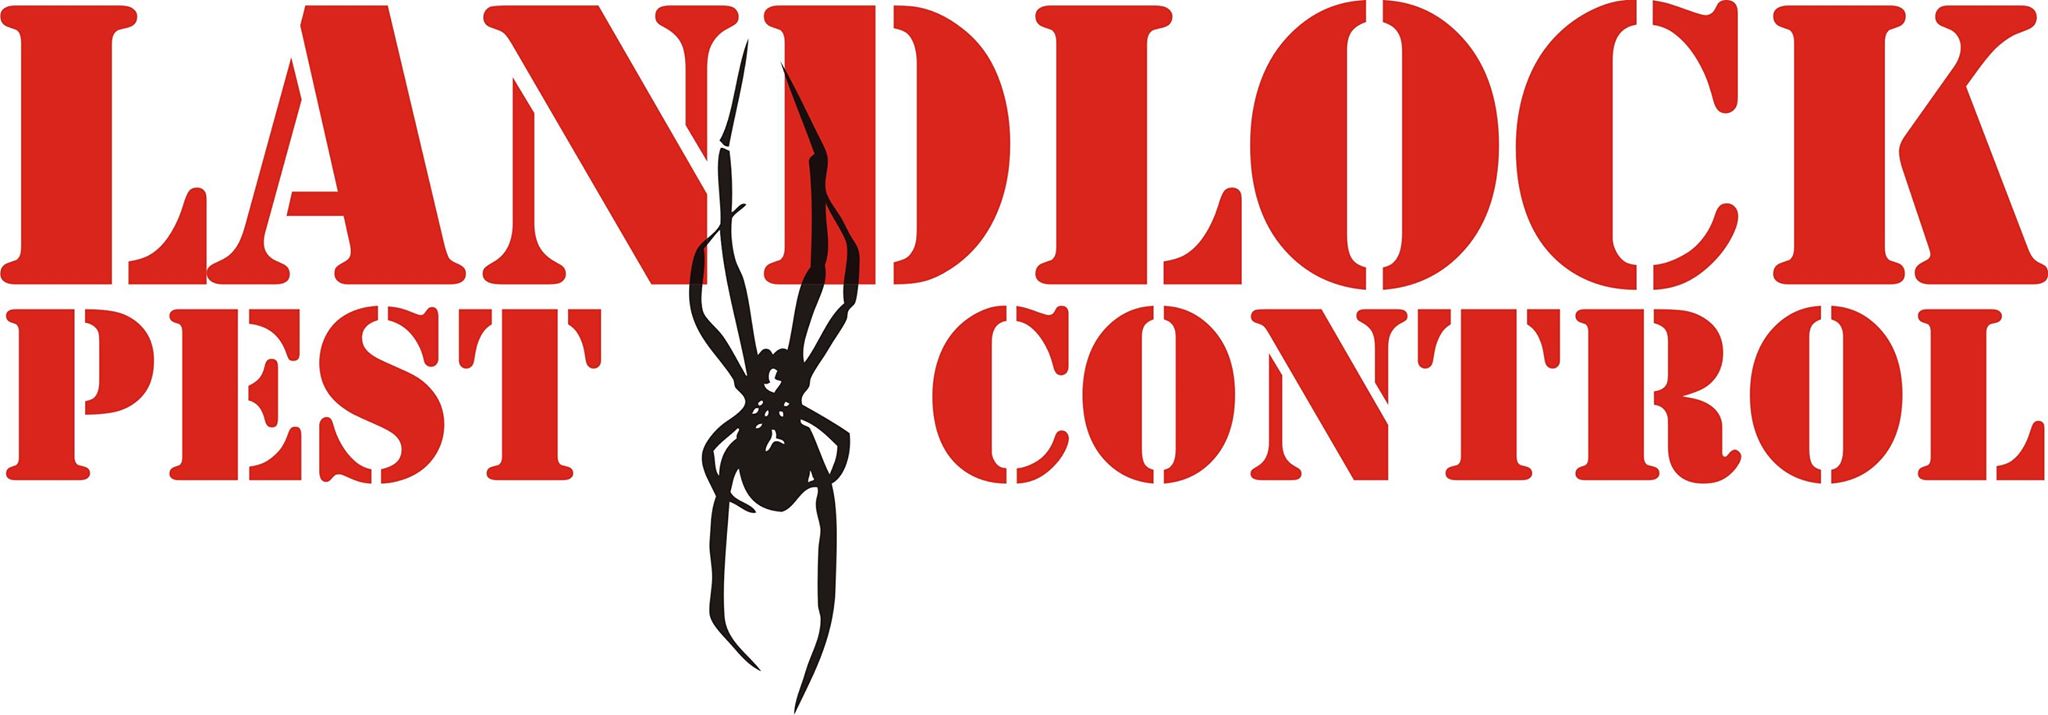 Landlock Pest Control, Inc. Logo